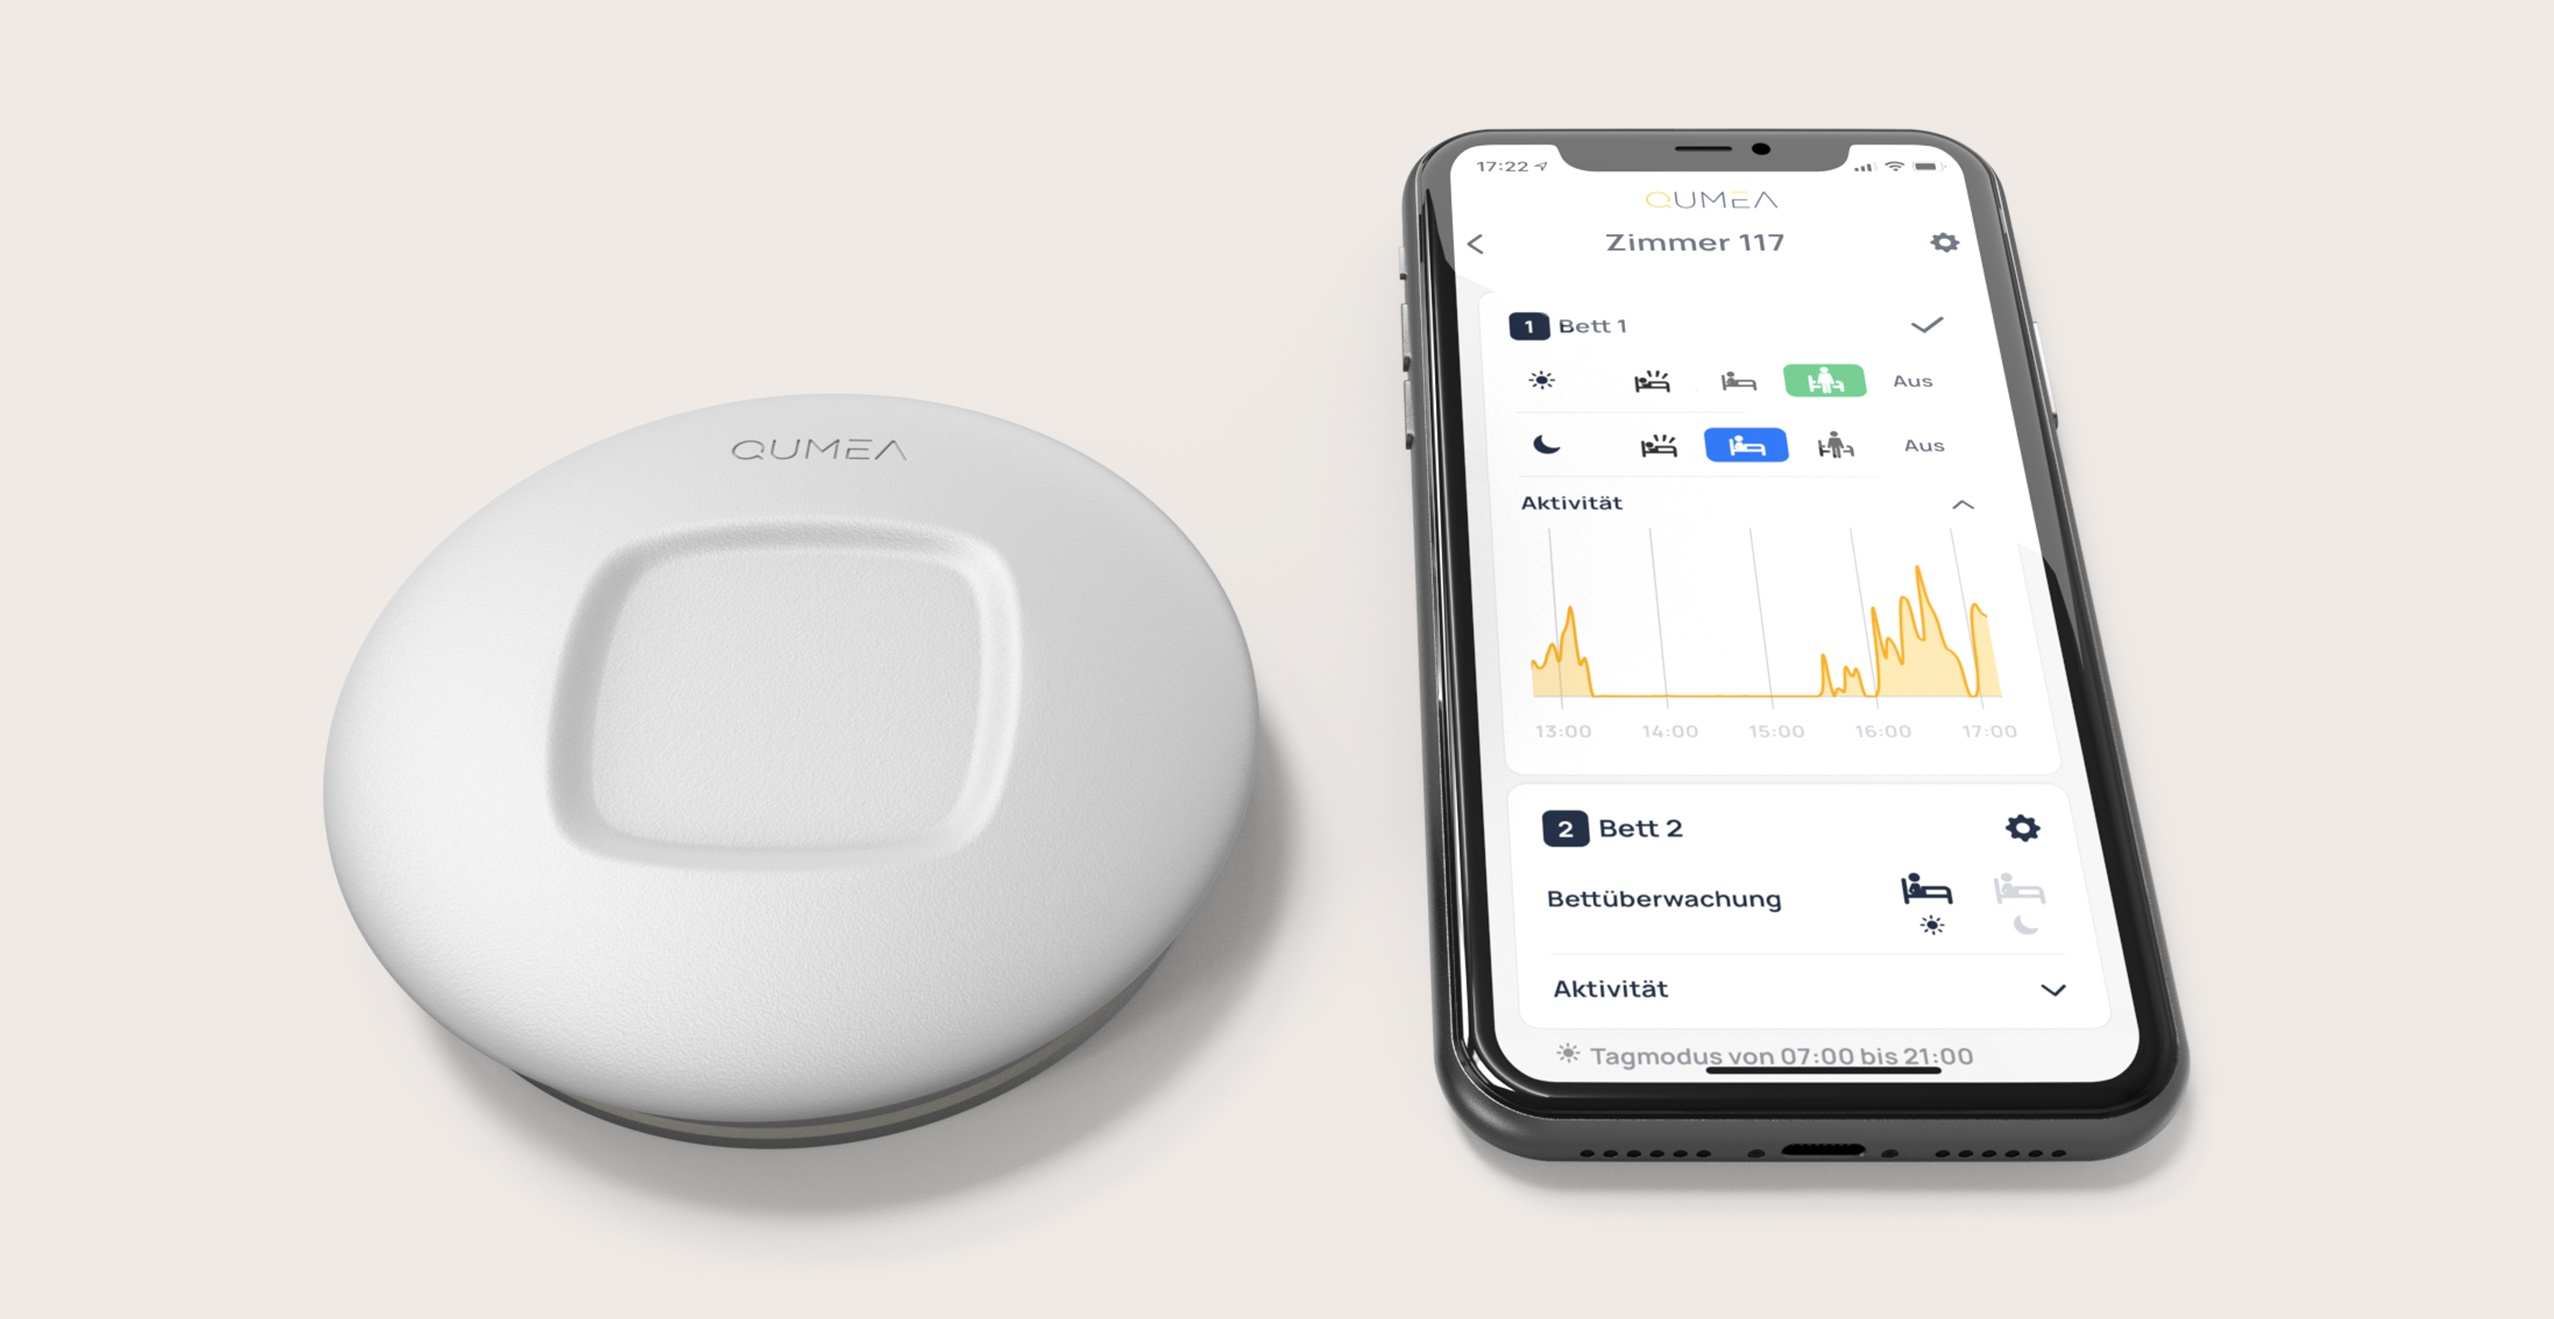 Digital health startup Qumea closes 1.8 million seed round